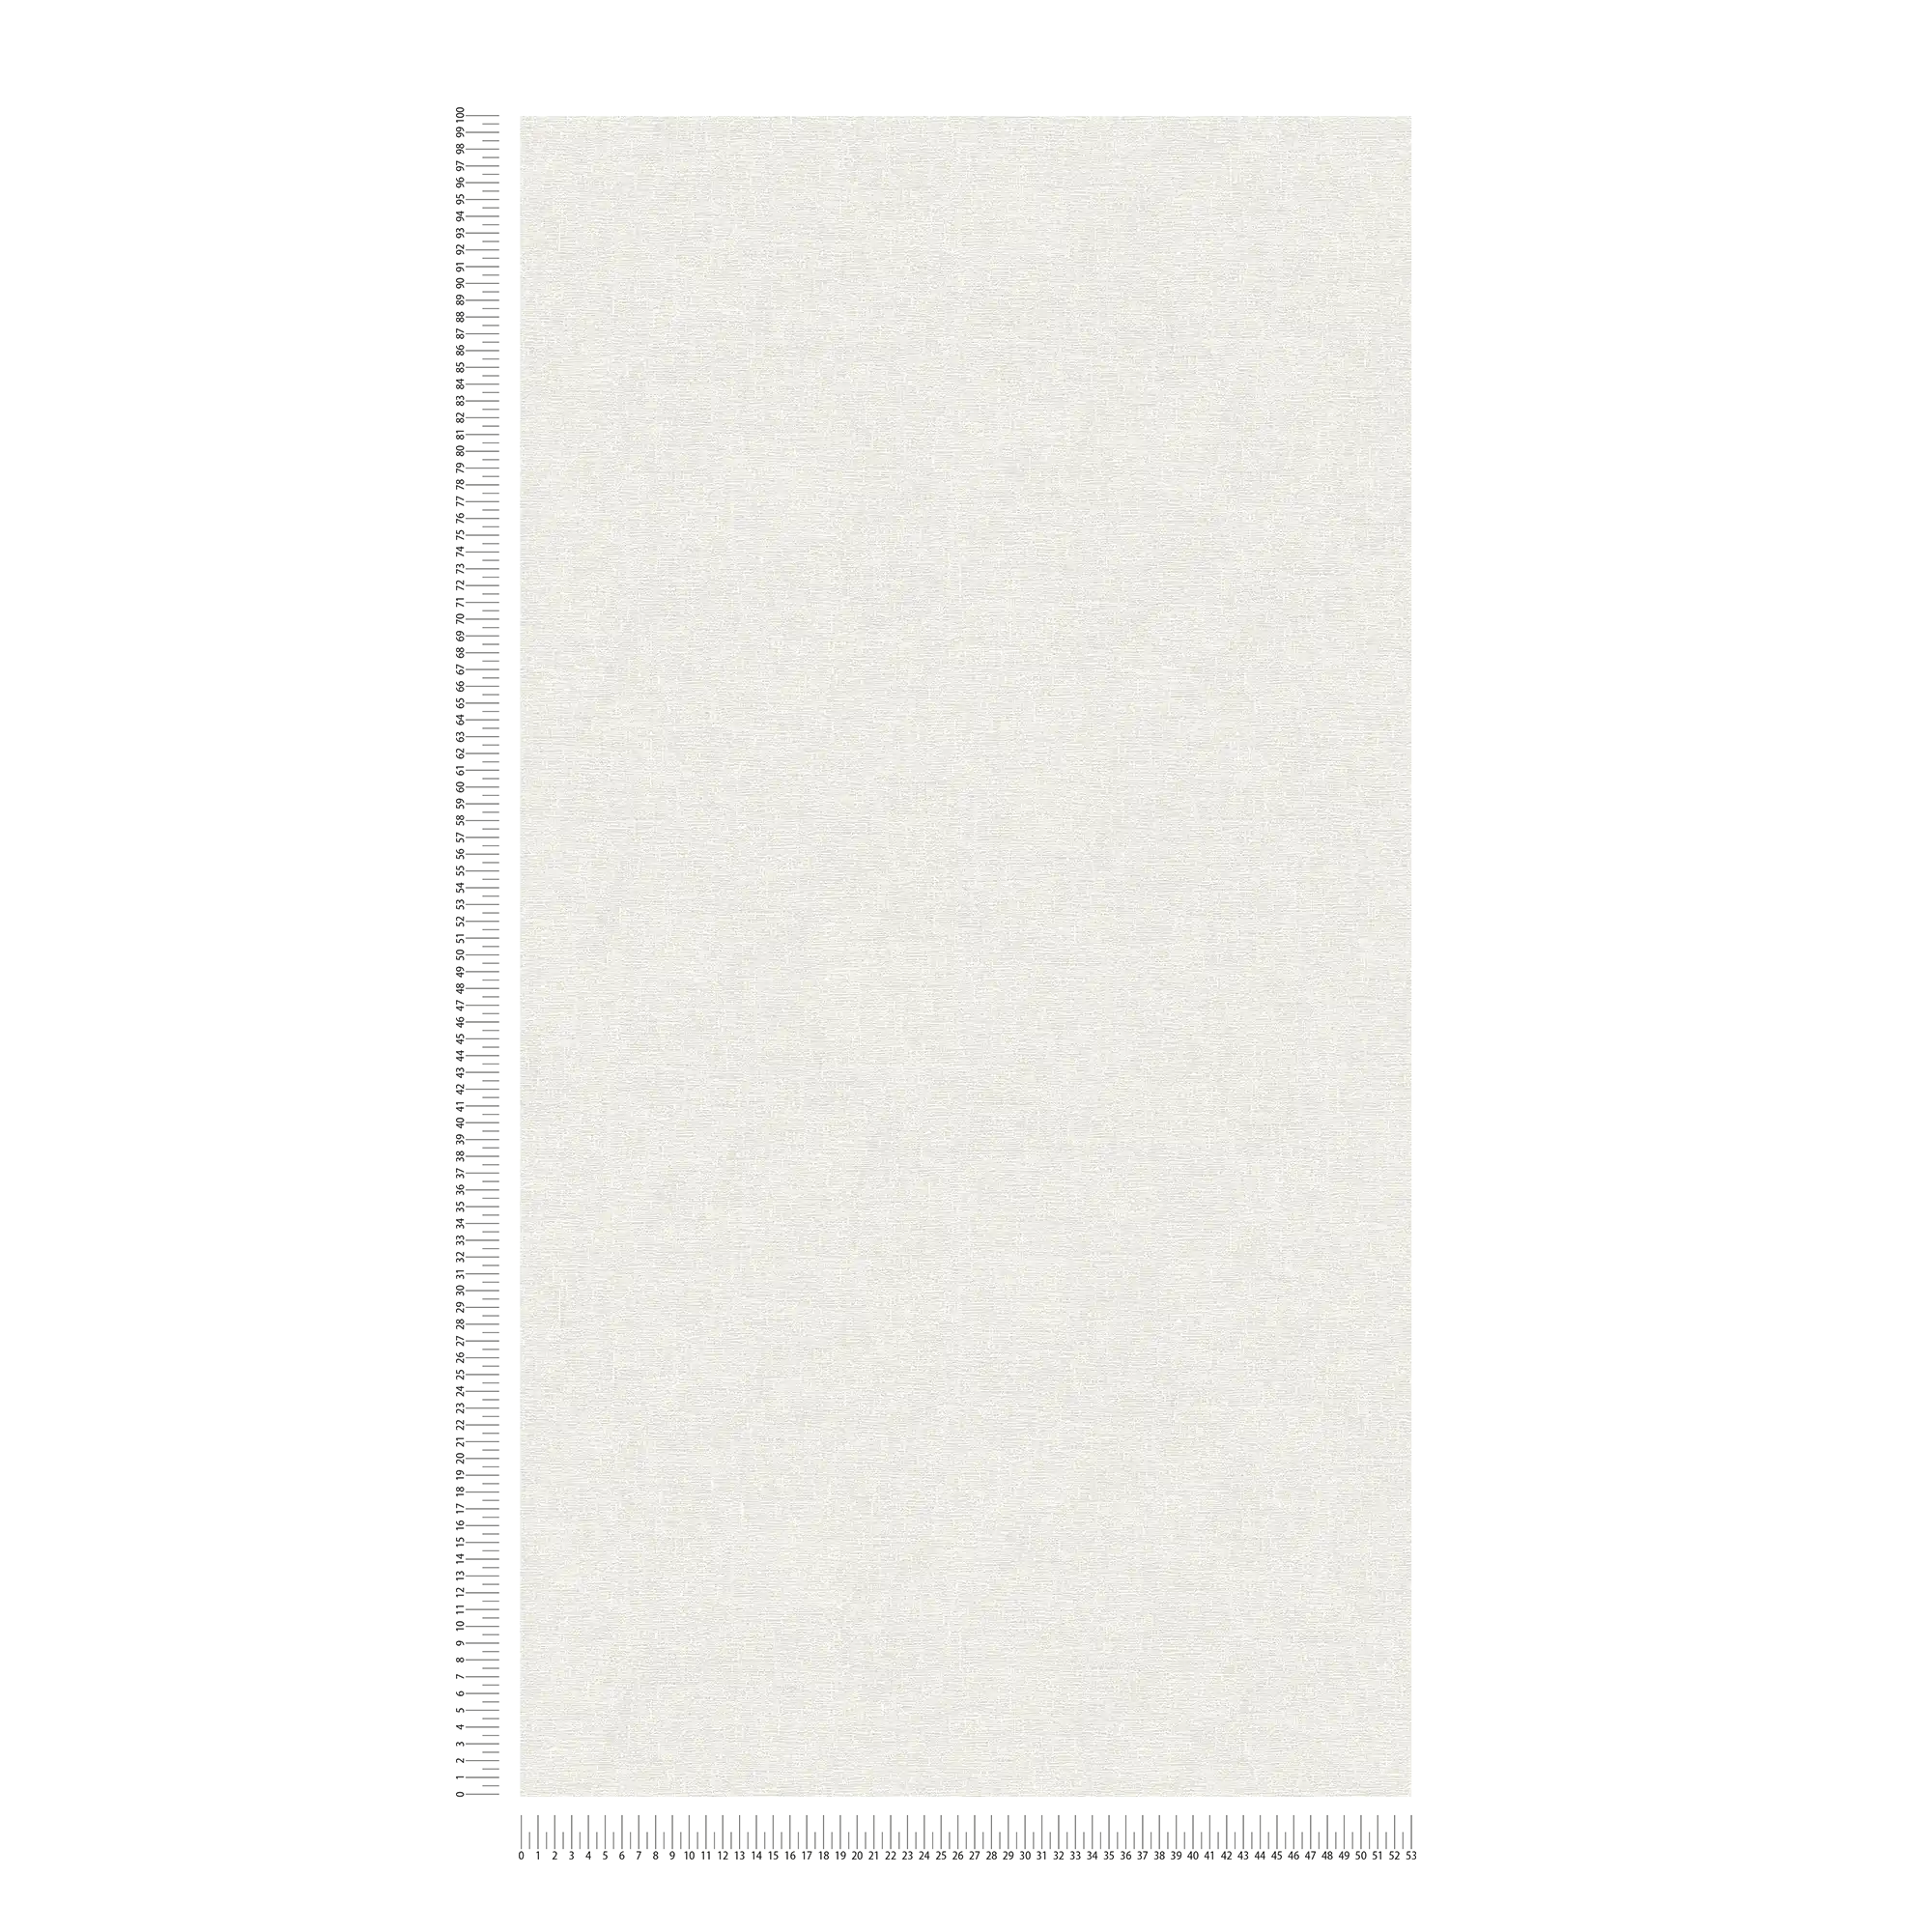             Papel pintado liso de color blanco oscuro con un sutil dibujo texturizado
        